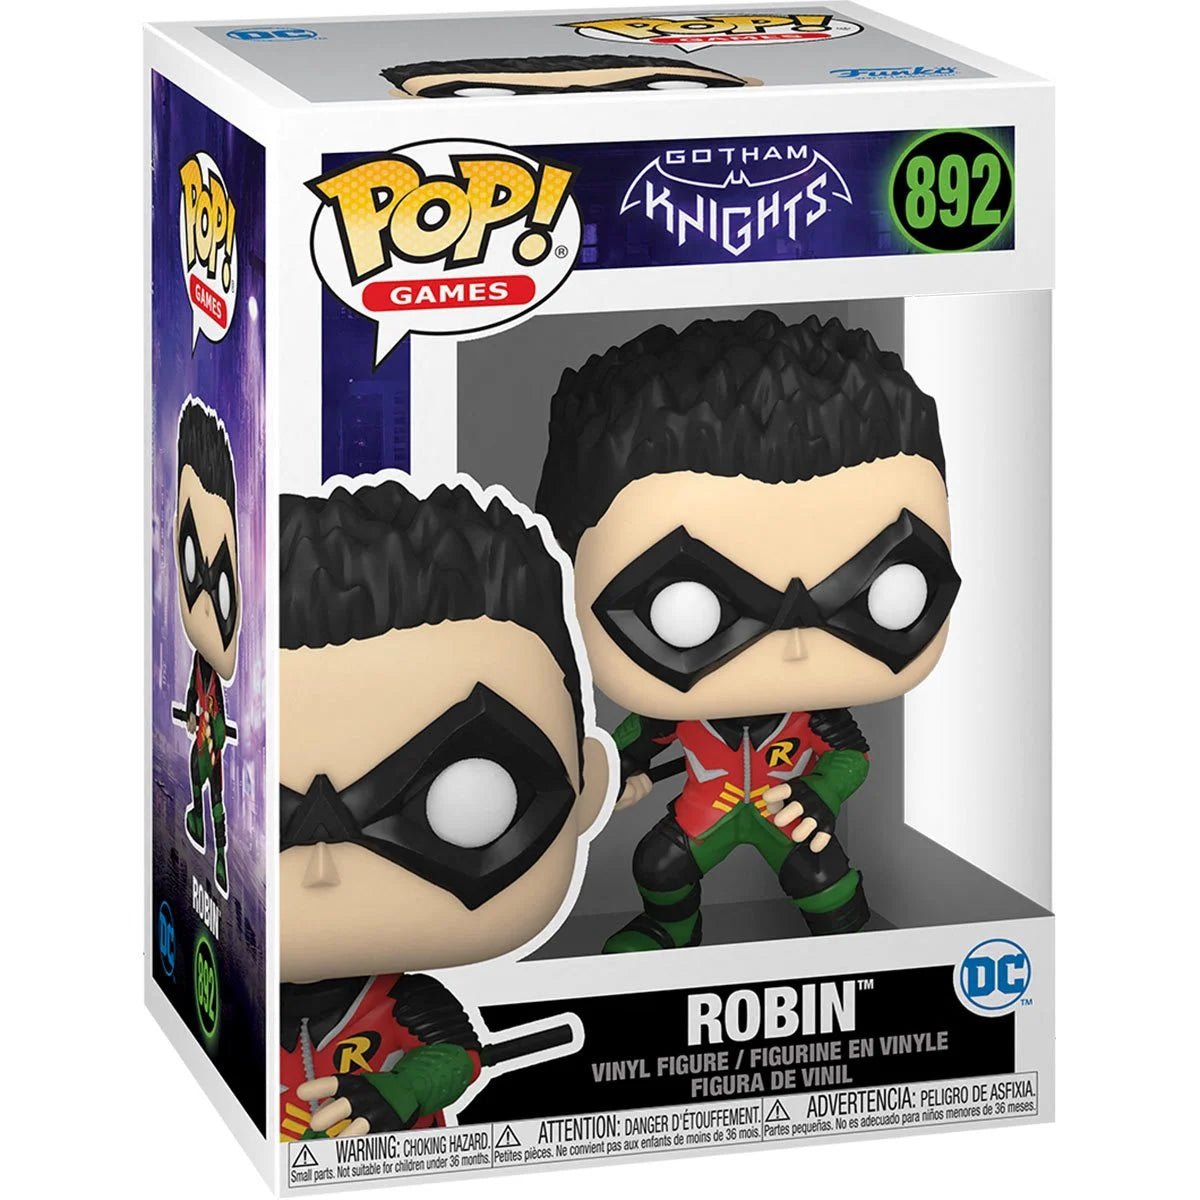 Batman: Gotham Knights Robin Pop! Vinyl Figure in box - Heretoserveyou